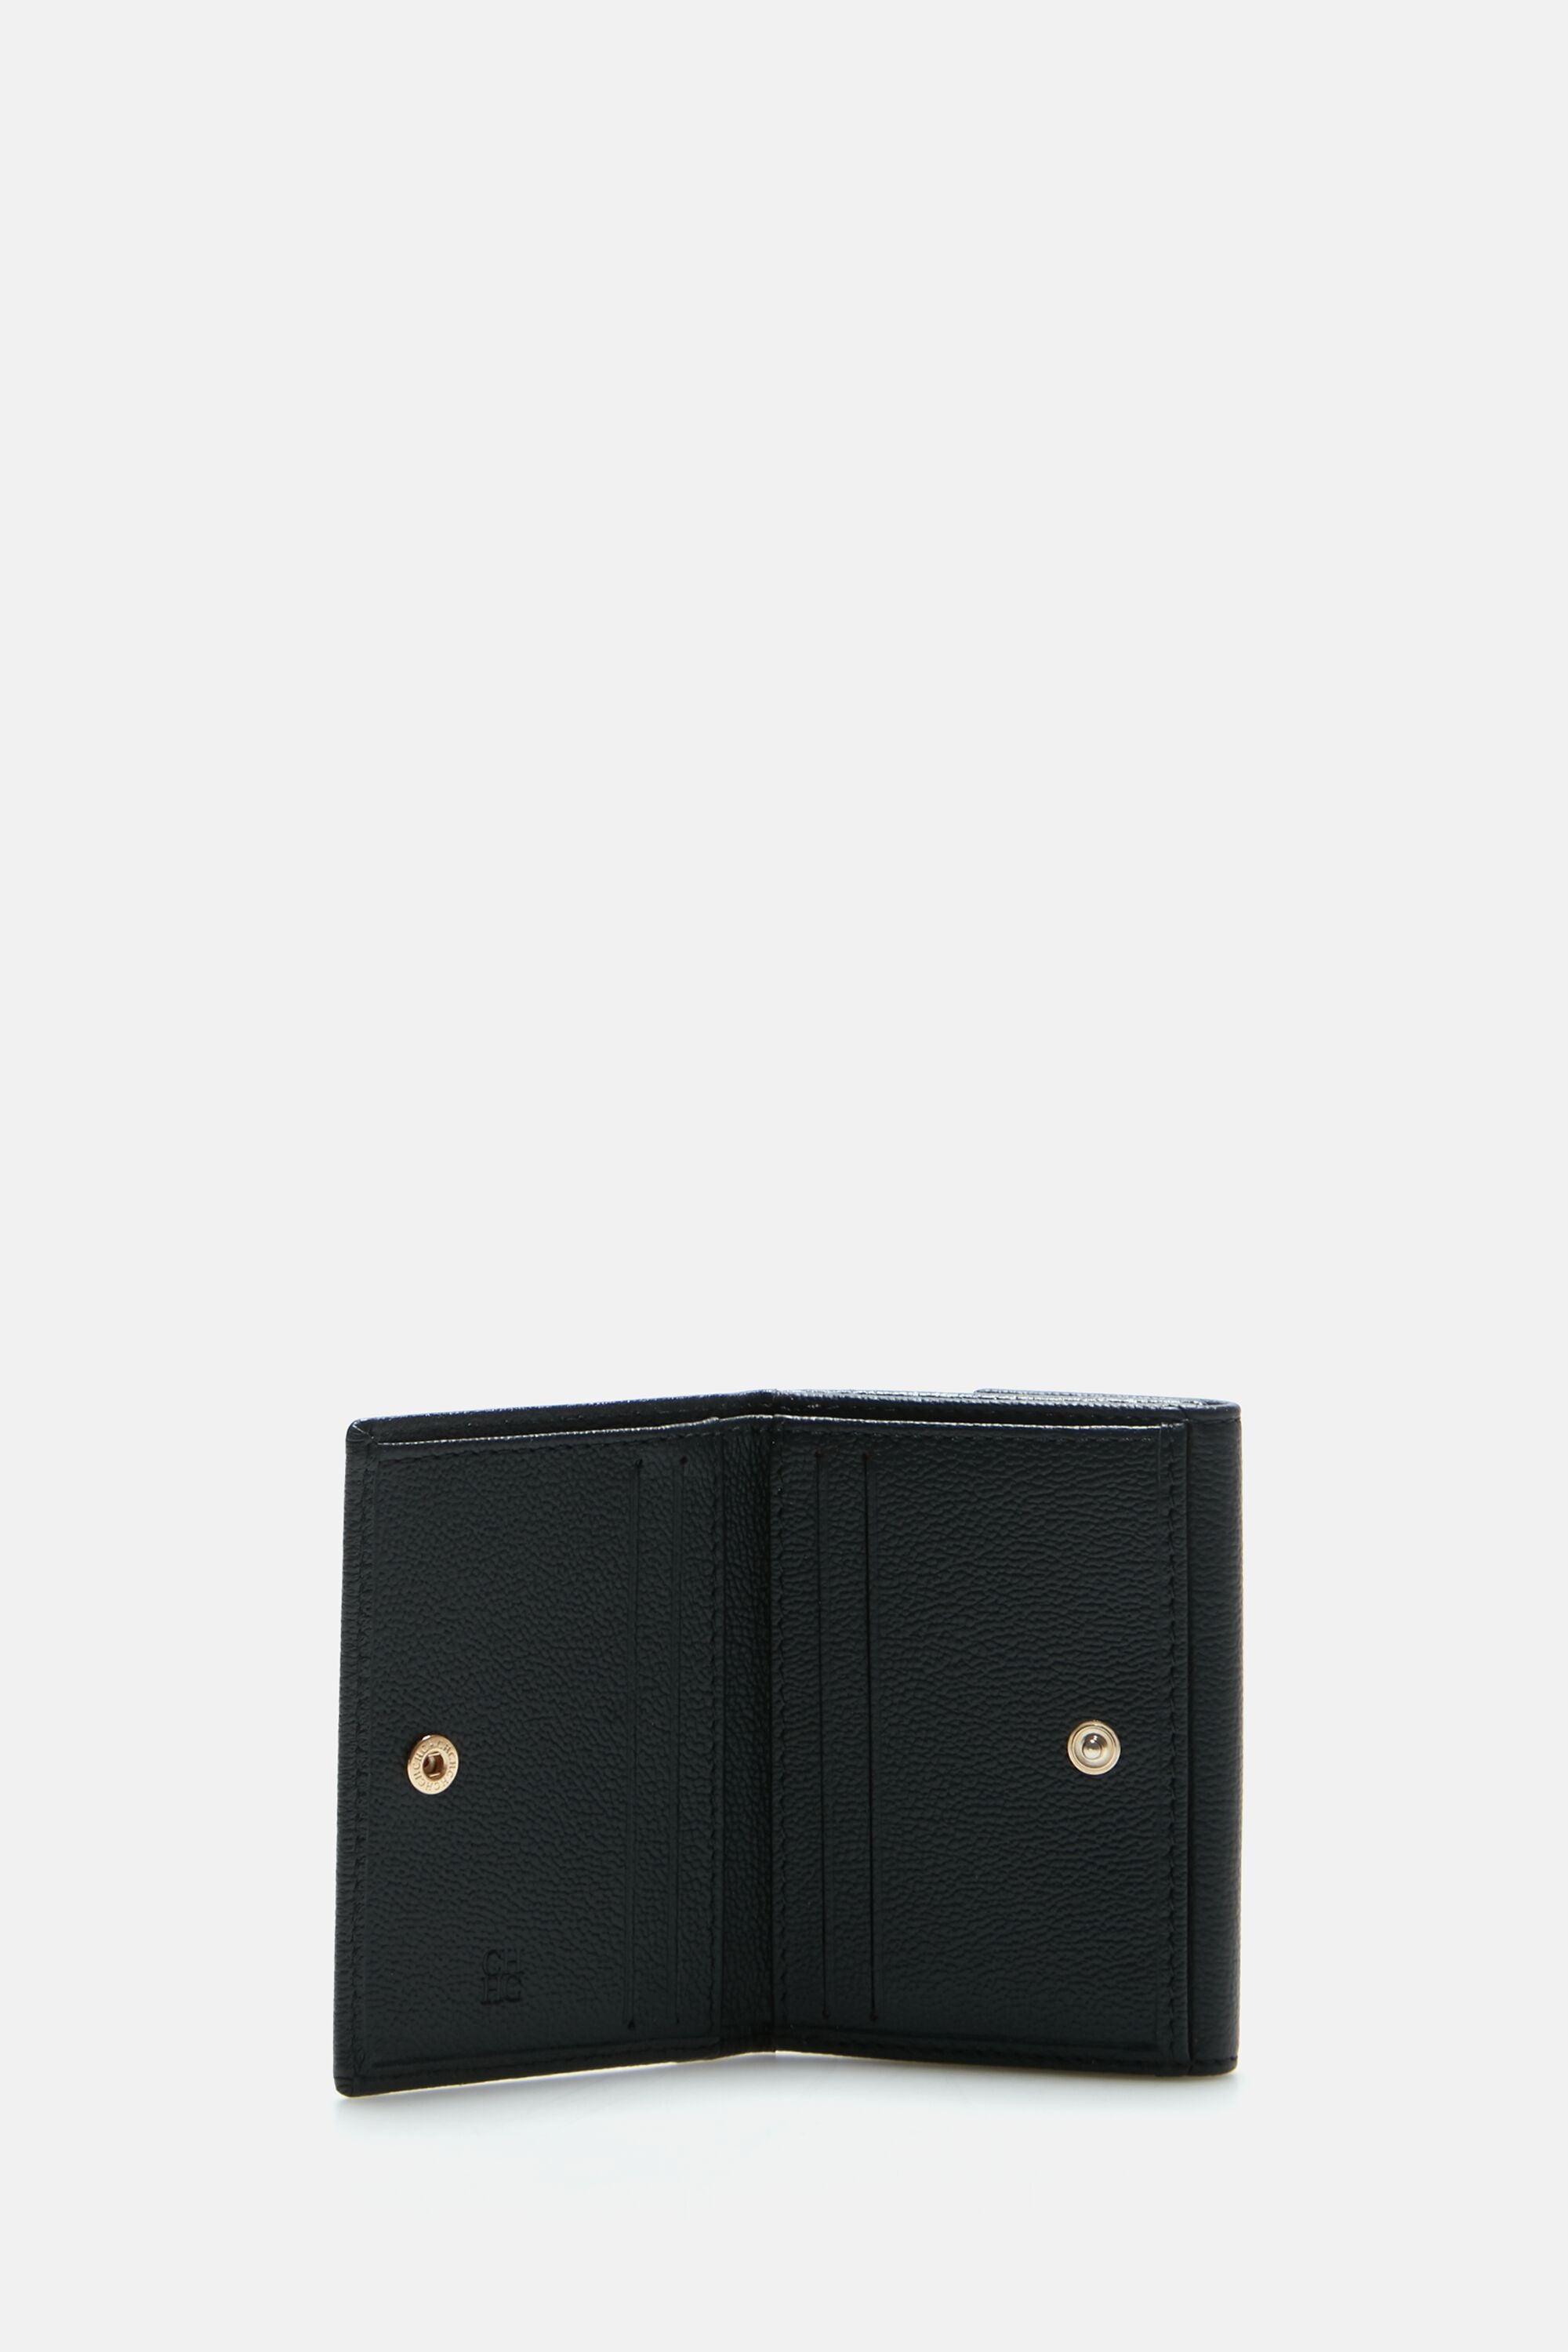 GUCCI Plain Leather Folding Wallet Logo Outlet Folding Wallets